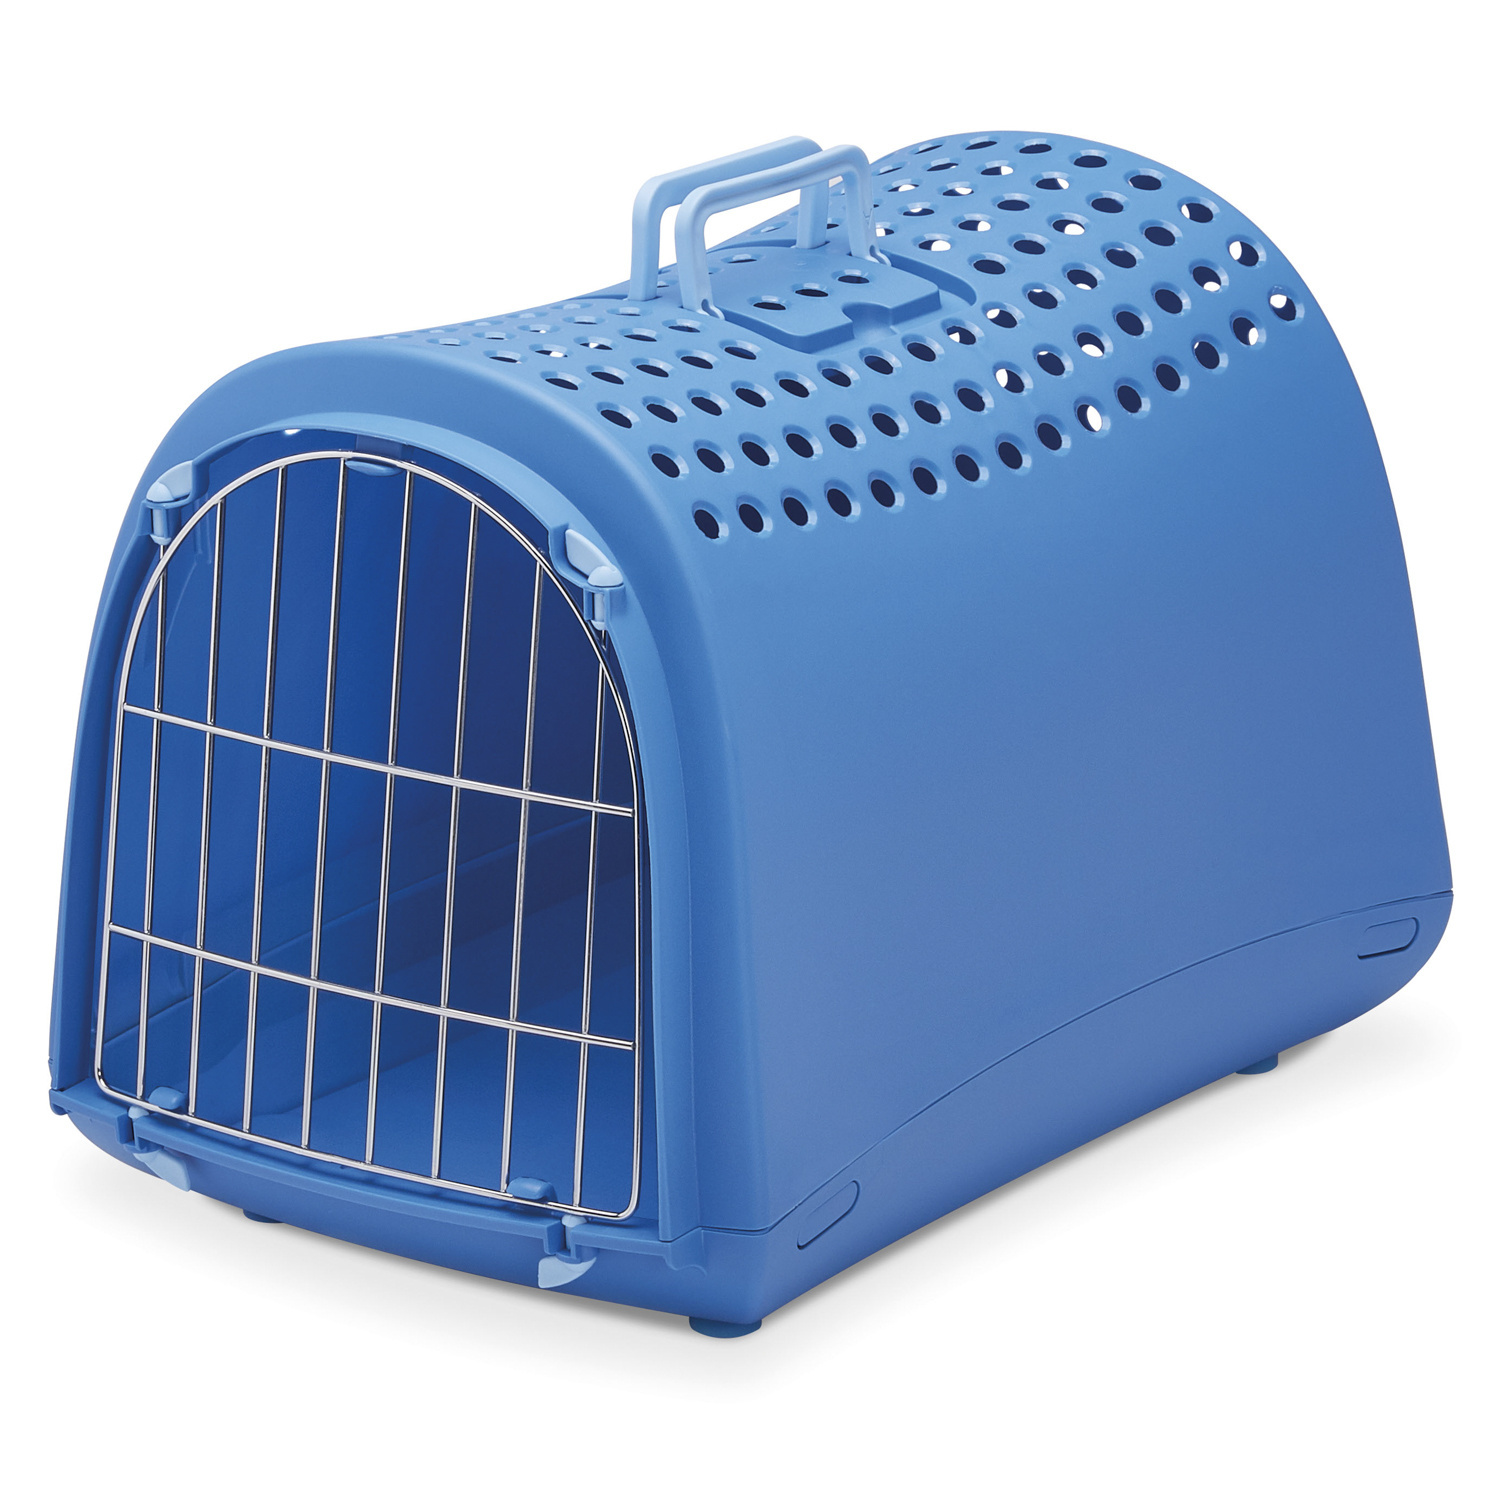 IMAC IMAC переноска для кошек и собак, нежно-голубой (1,37 кг) переноска imac linus для животных 50 х 32 х 34 5 см бежево серый